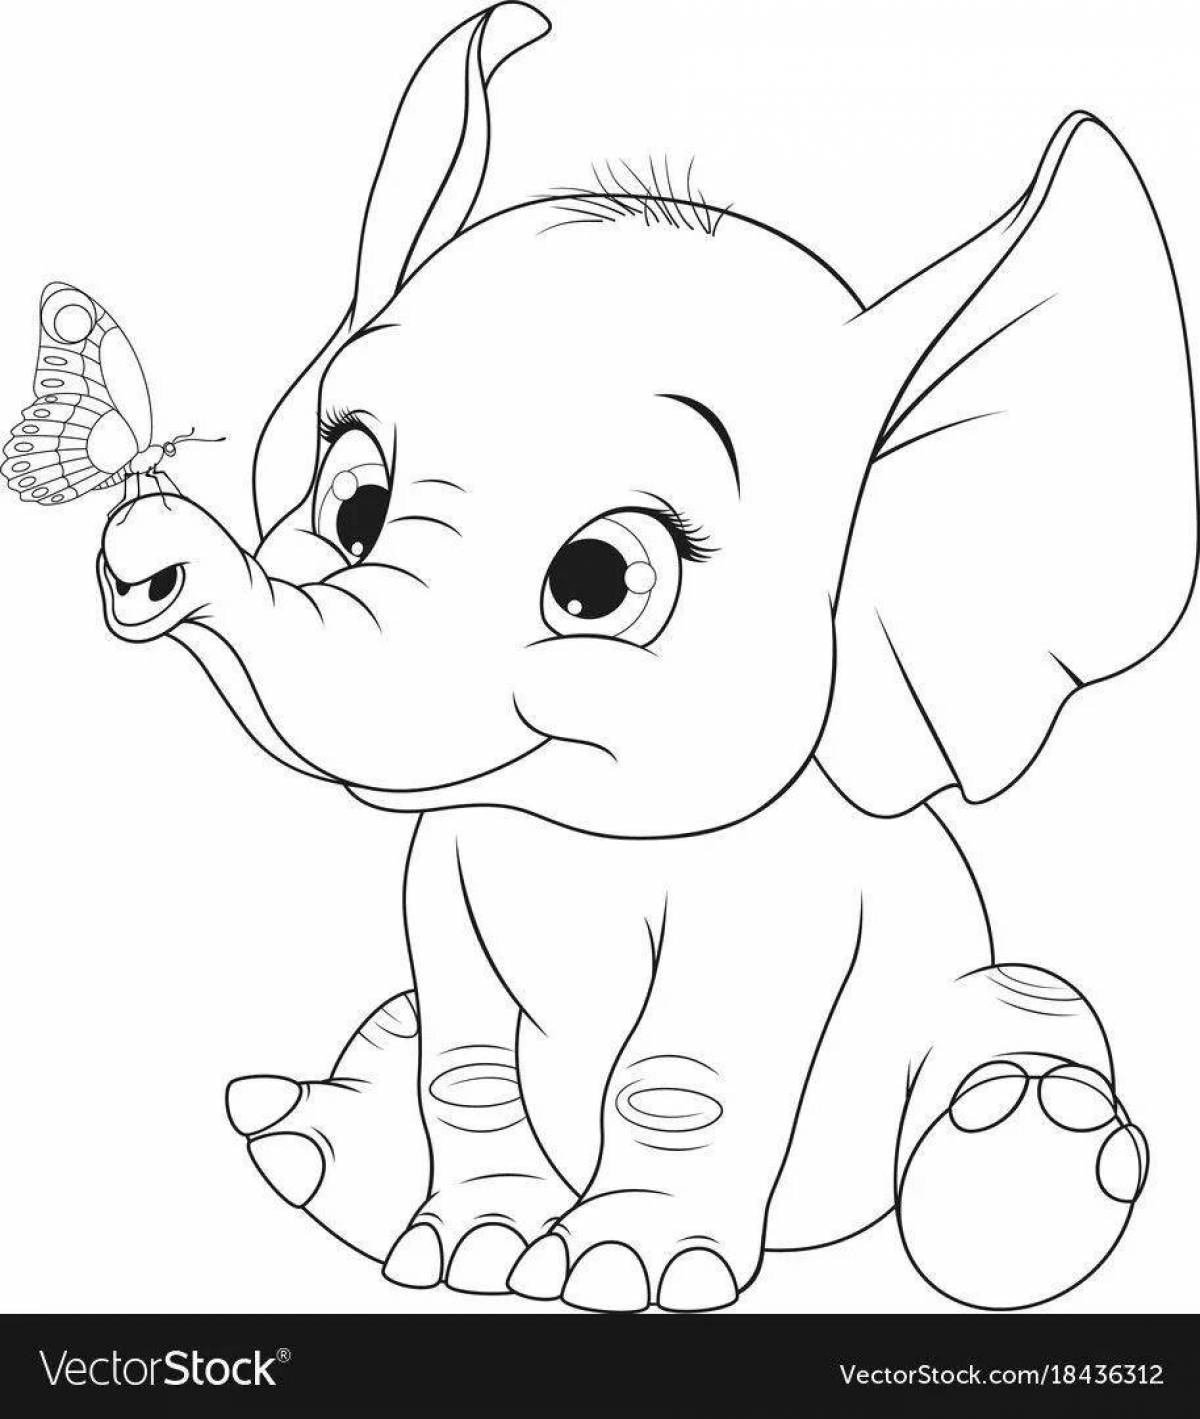 Shiny elephant coloring book